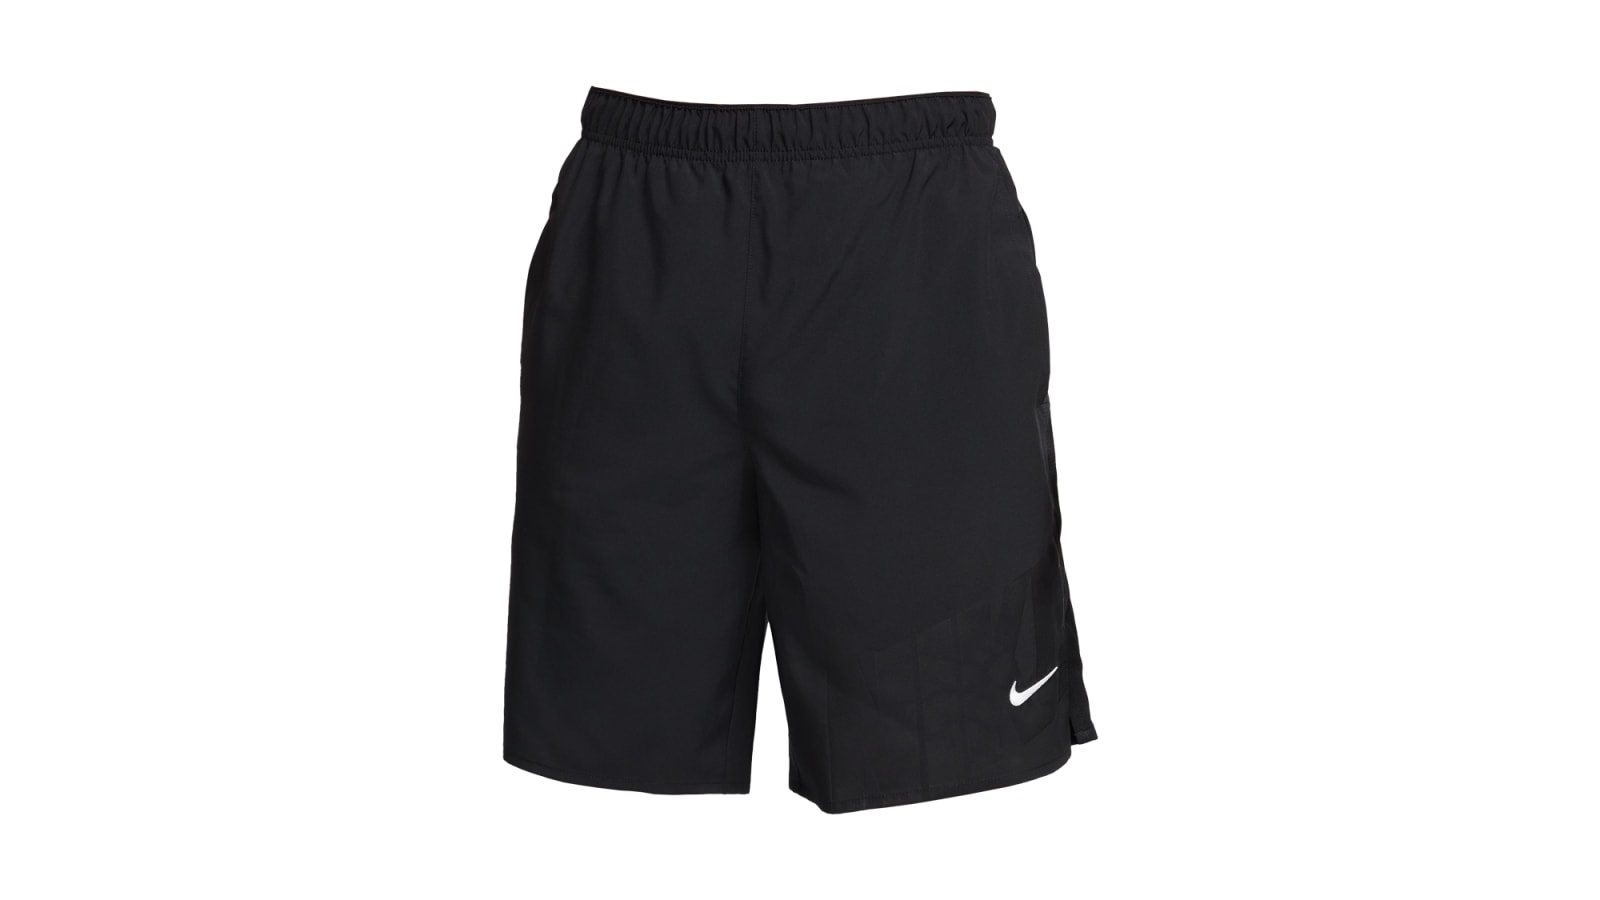 Nike Men's Boxing Flex Woven Training Short W/Pockets - Anthracite/White